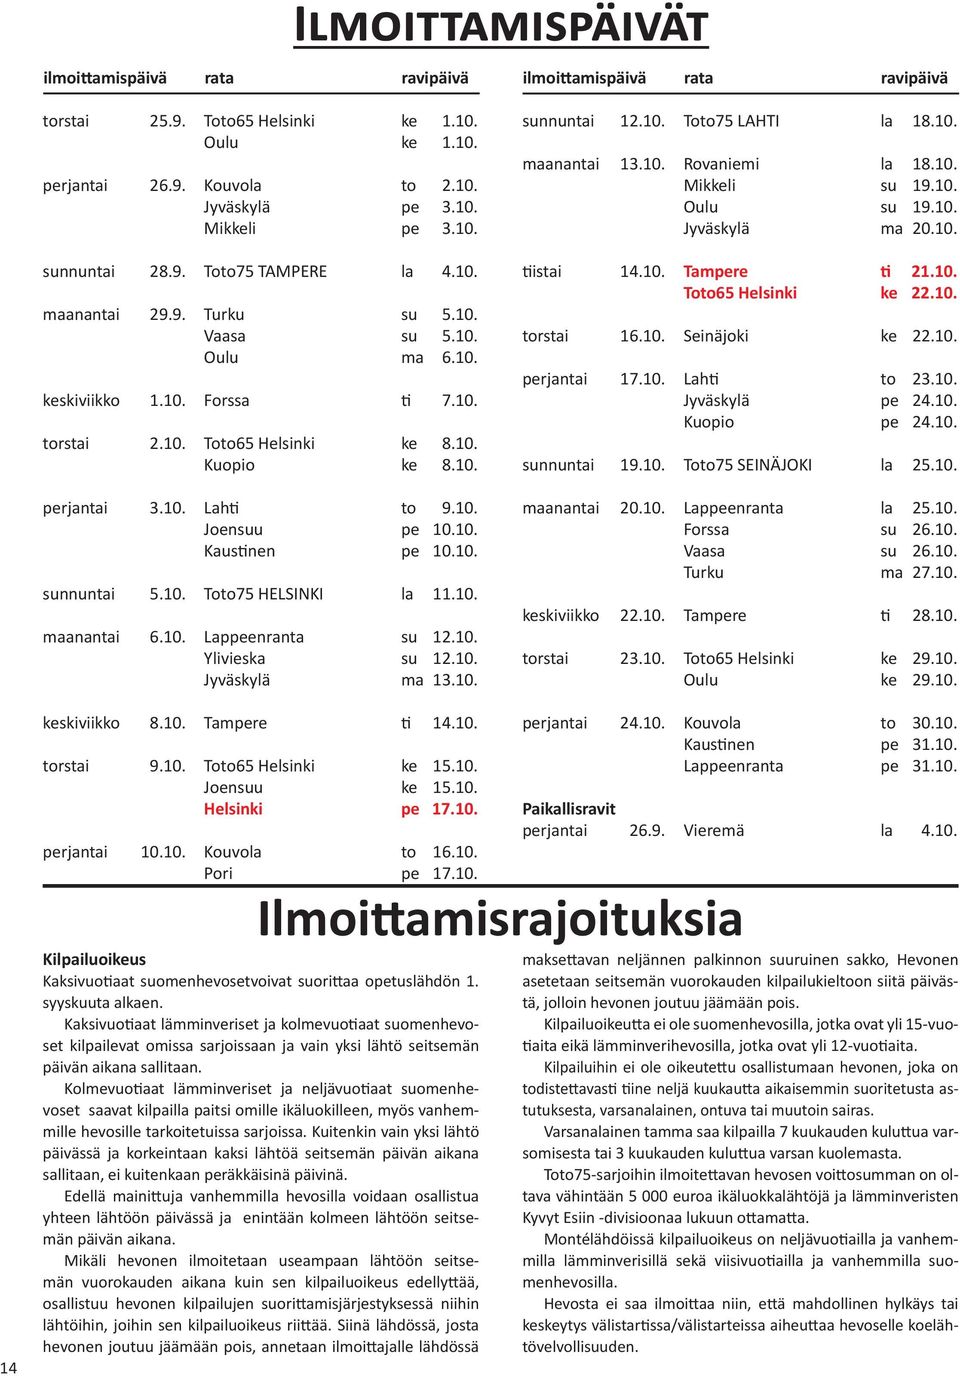 10. Lahti to 9.10. Joensuu pe 10.10. Kaustinen pe 10.10. sunnuntai 5.10. Toto75 HELSINKI la 11.10. maanantai 6.10. Lappeenranta su 12.10. Ylivieska su 12.10. Jyväskylä ma 13.10. sunnuntai 12.10. Toto75 LAHTI la 18.